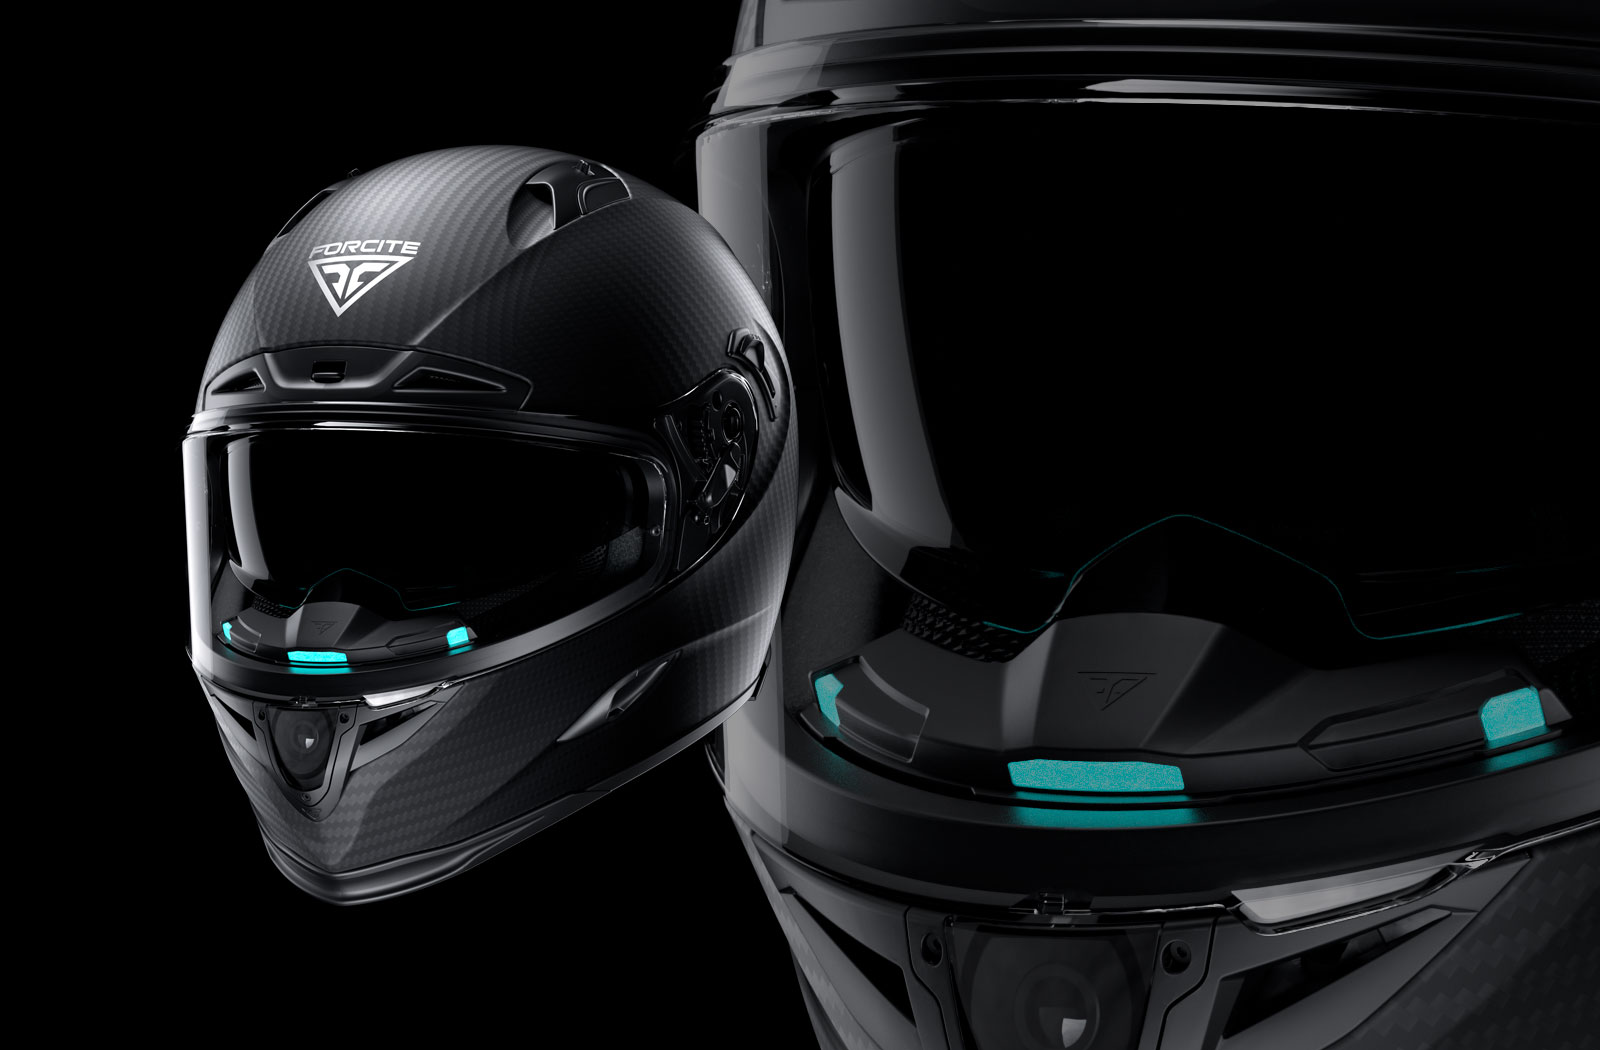 Forcite MK1S Smart Motorcycle helmet interview